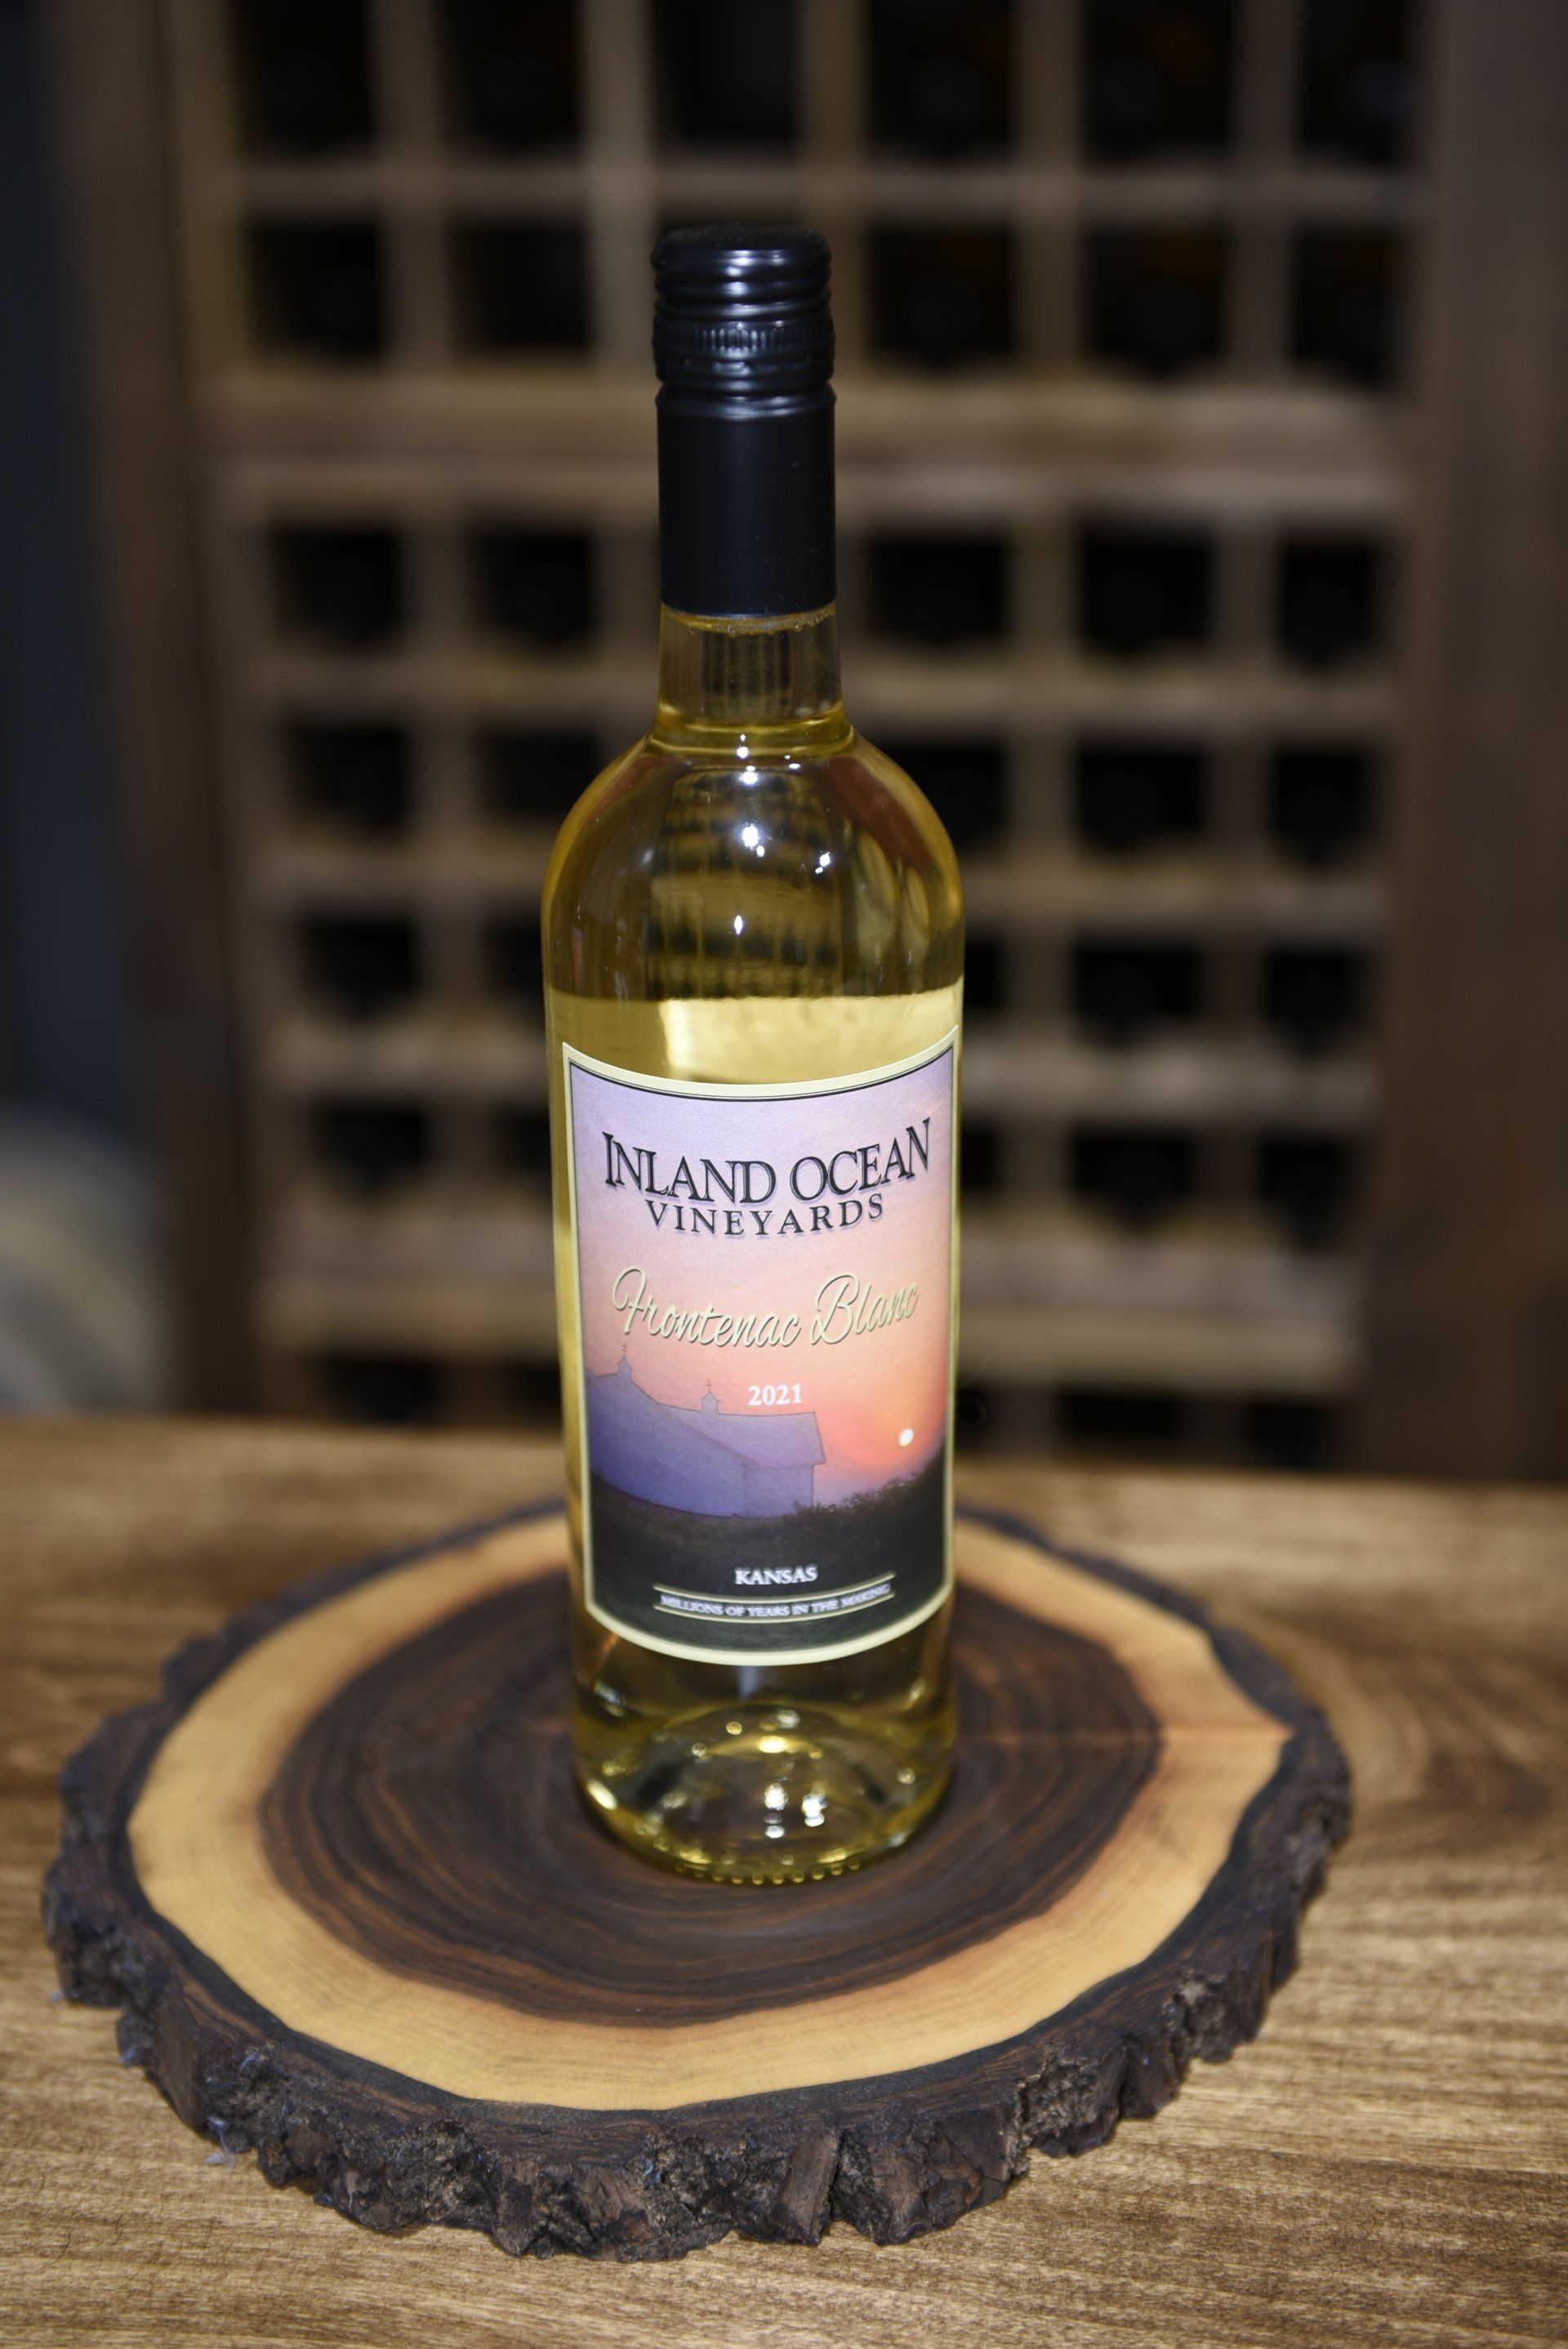 frontenac blanc wine inland ocean vineyards hutchinson ks